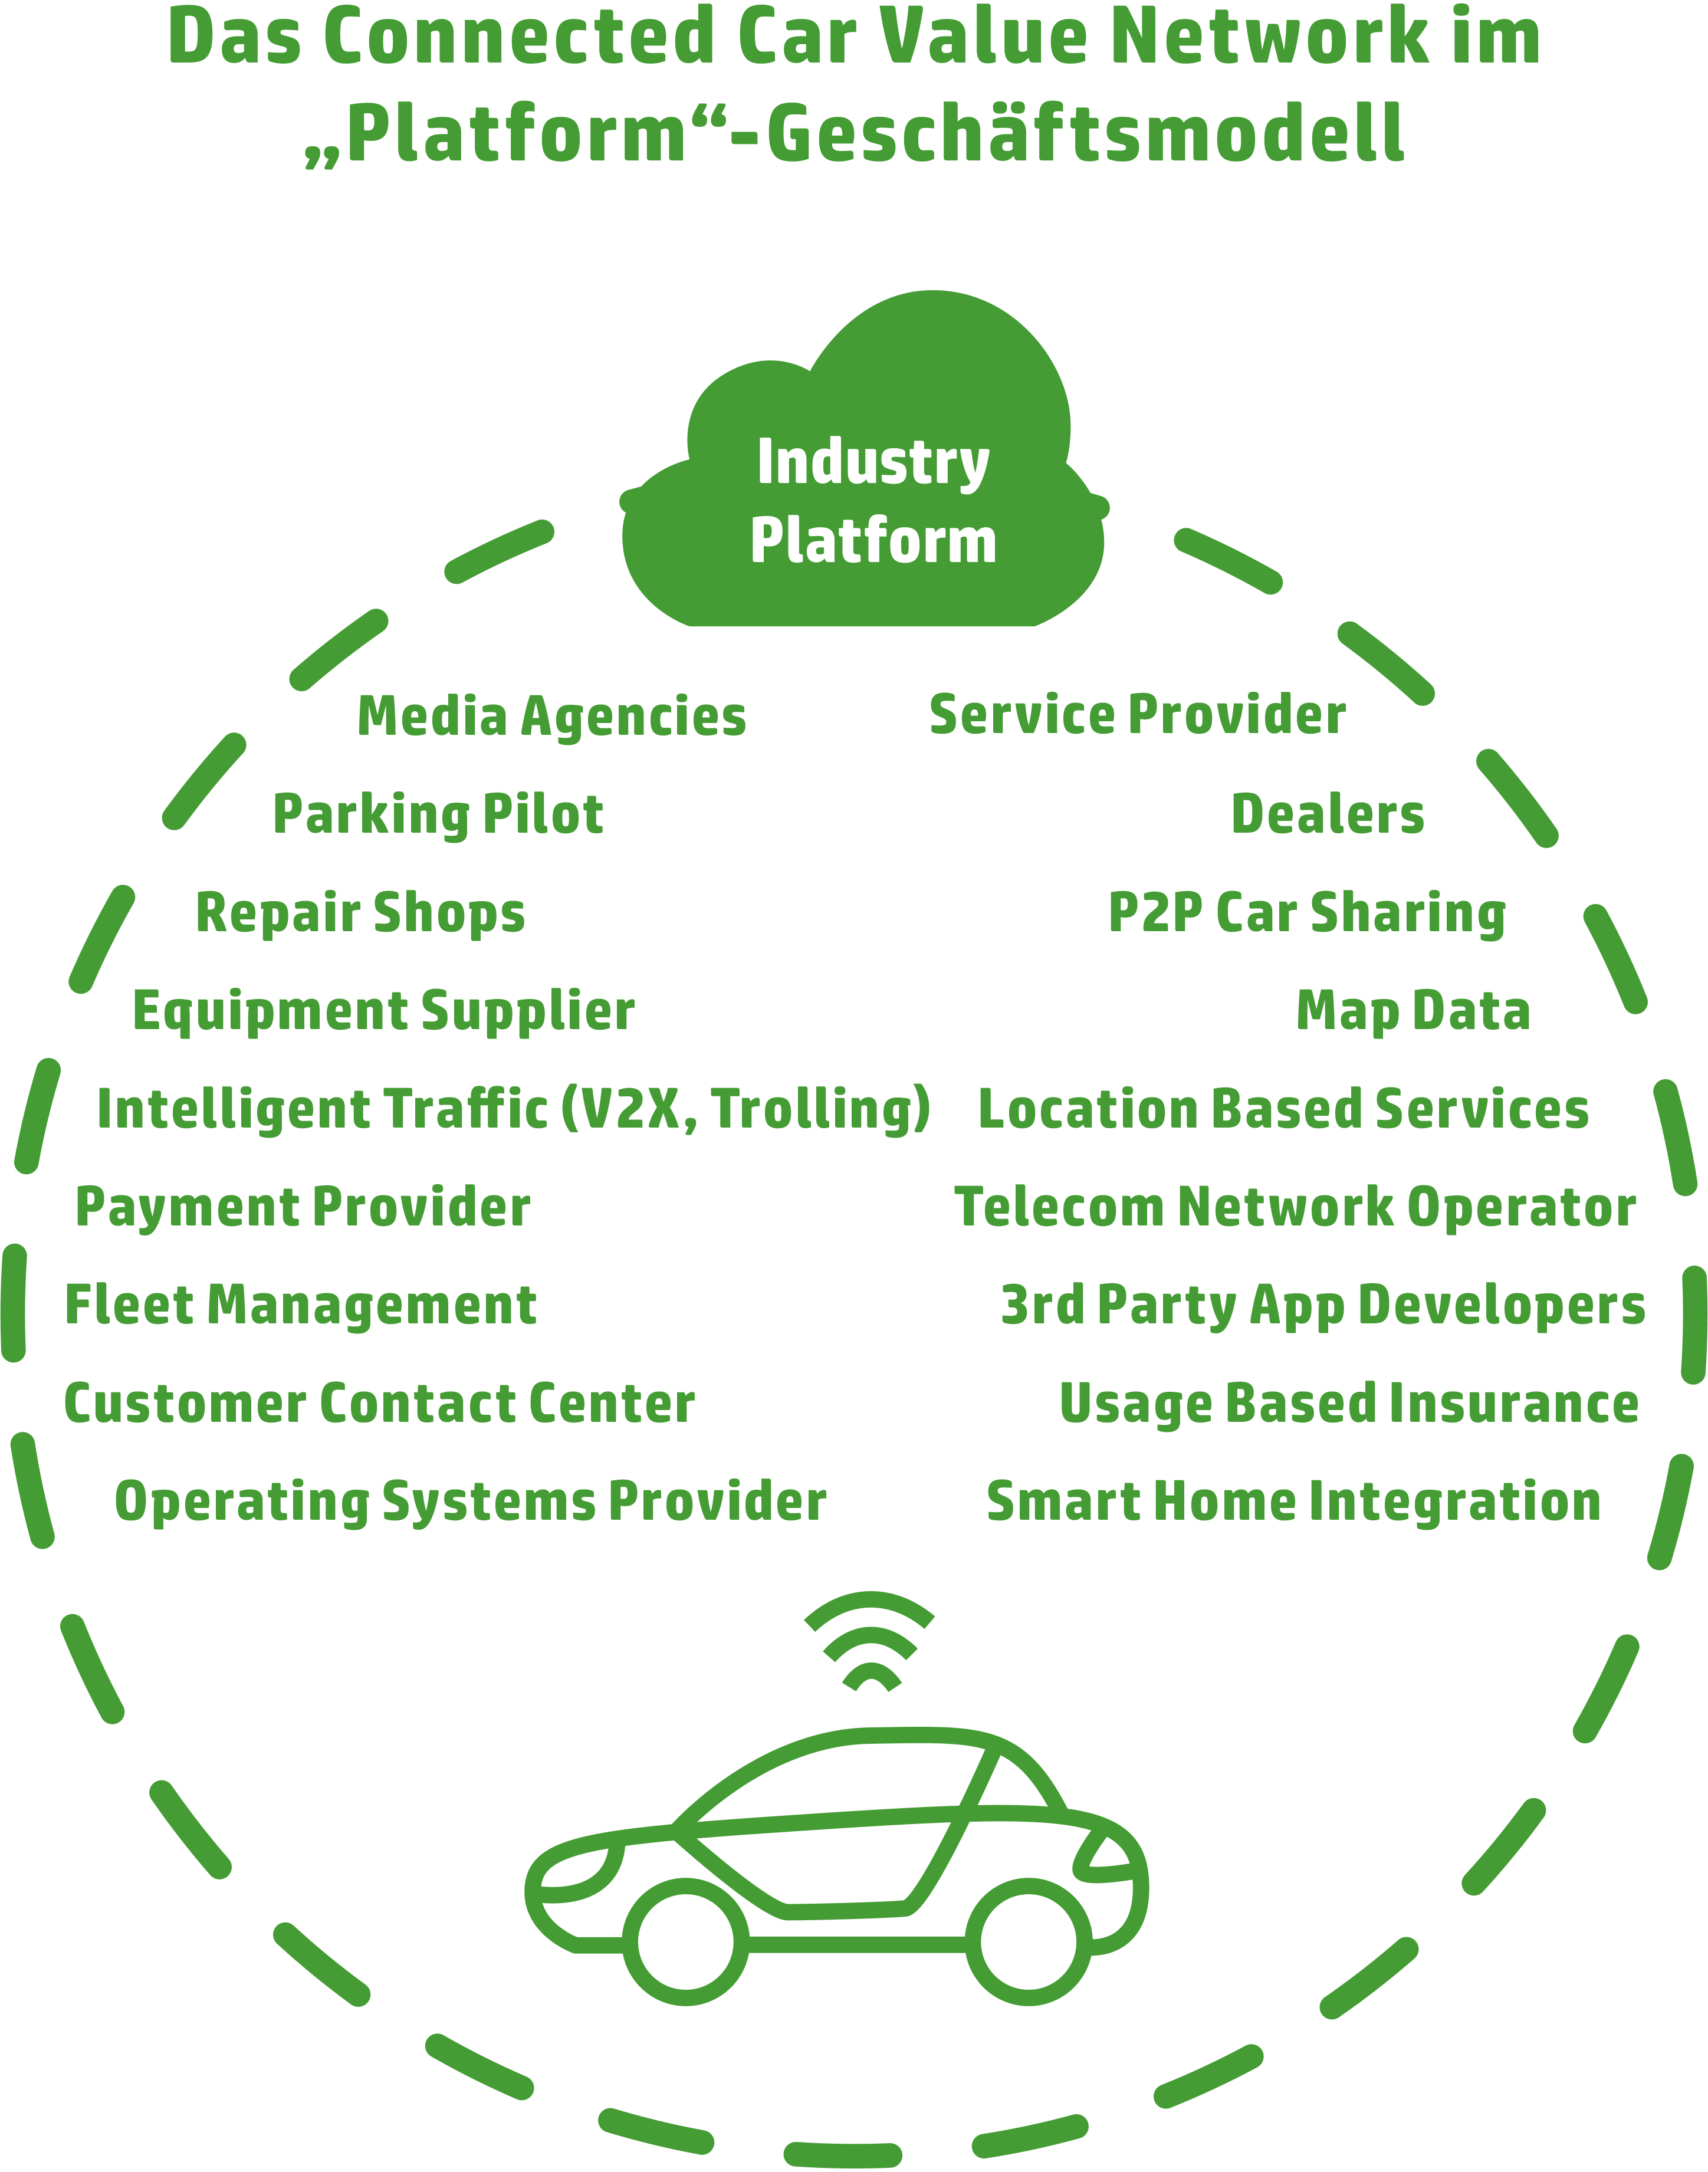 Connected-Car-Value-Network-als-Plattform-Geschäftsmodell